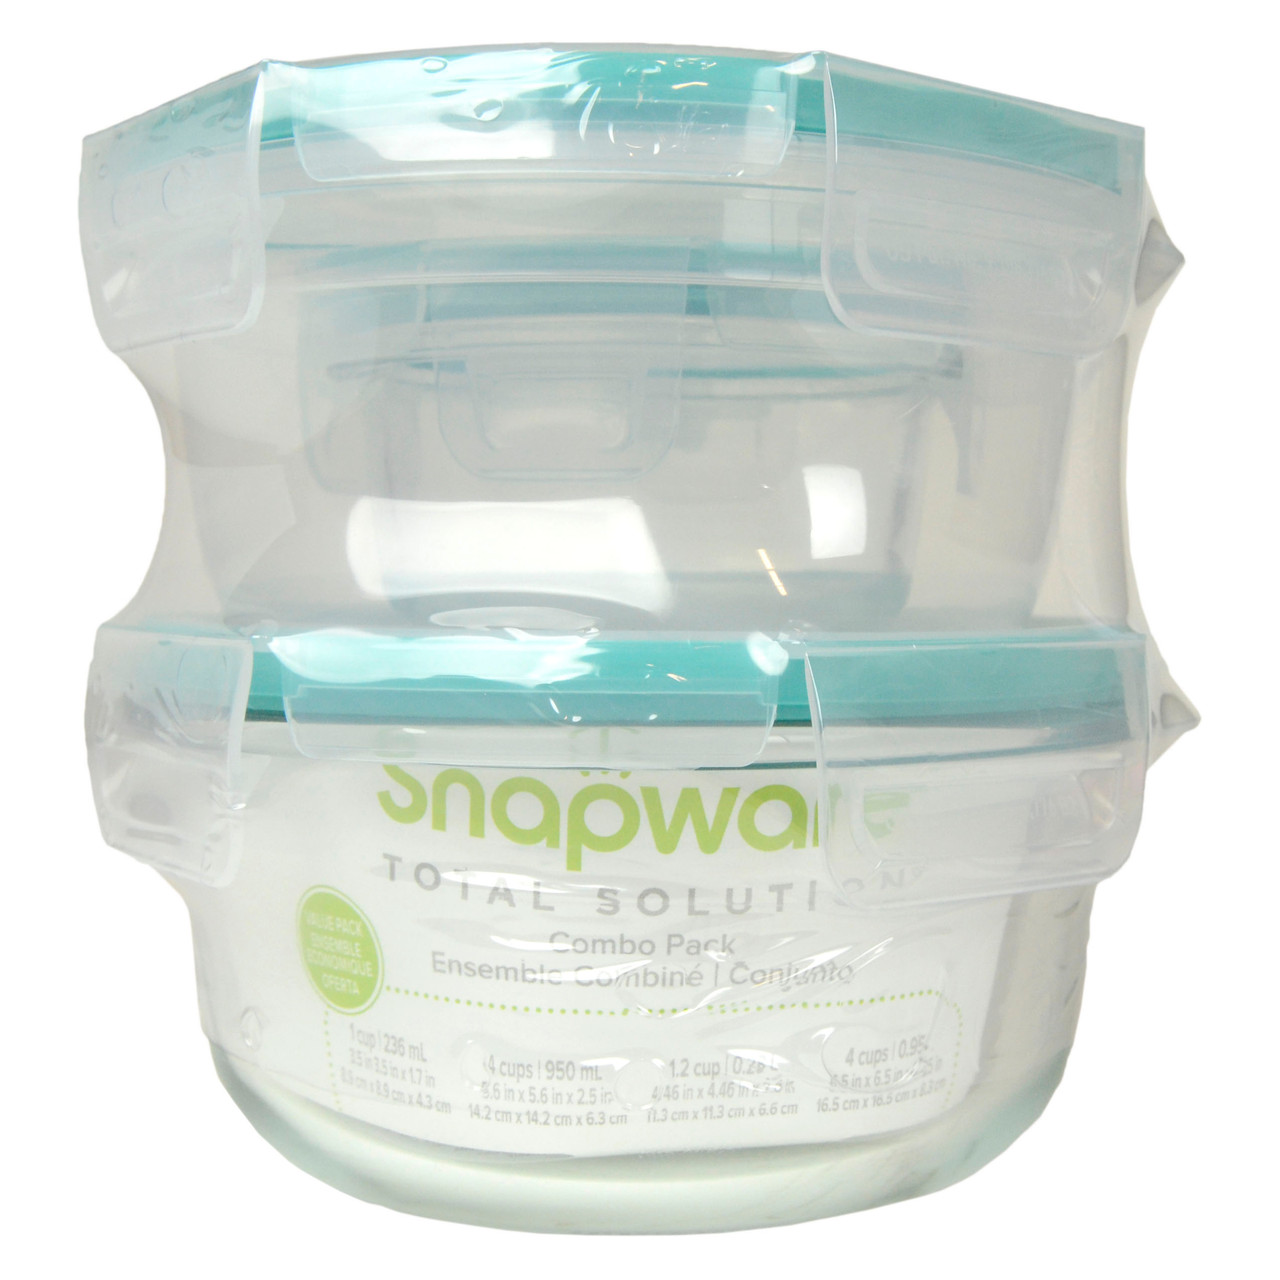 Snapware 38 piece set bpa-free plastic - household items - by